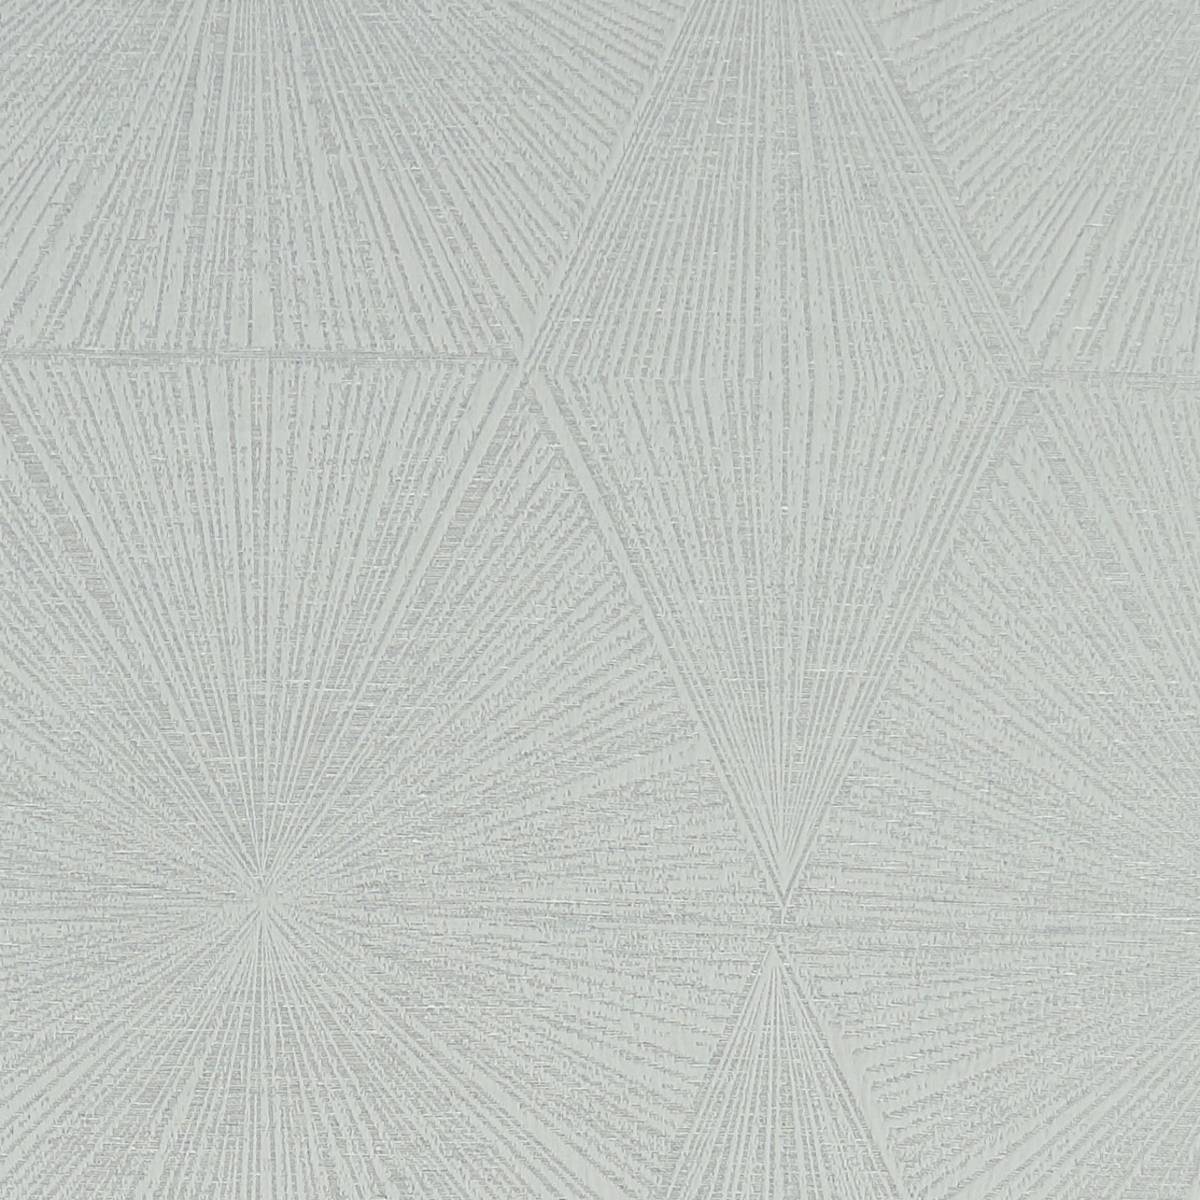 Blaize Silver Fabric by Studio G